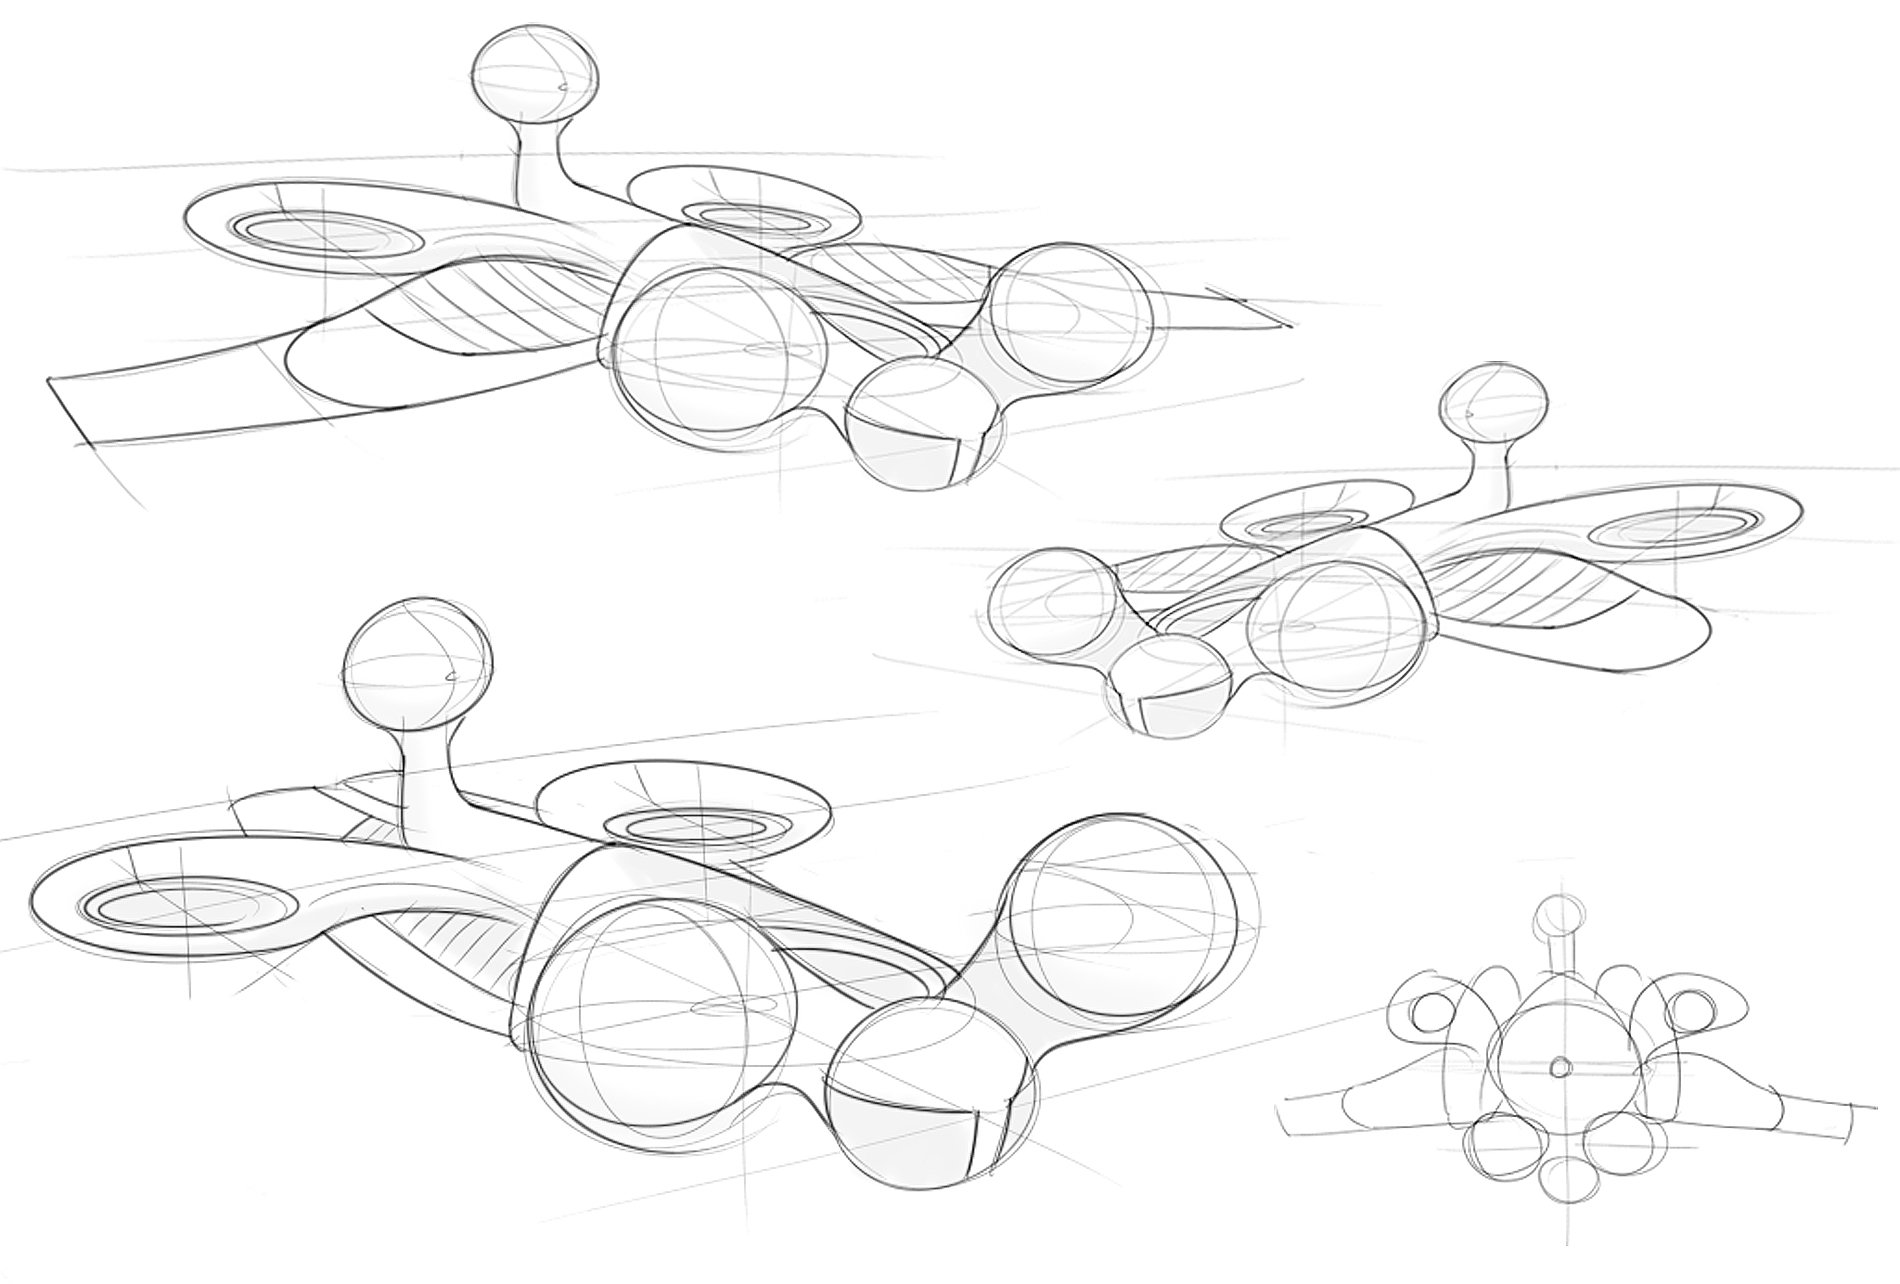 Drone Concept Sketches.jpg